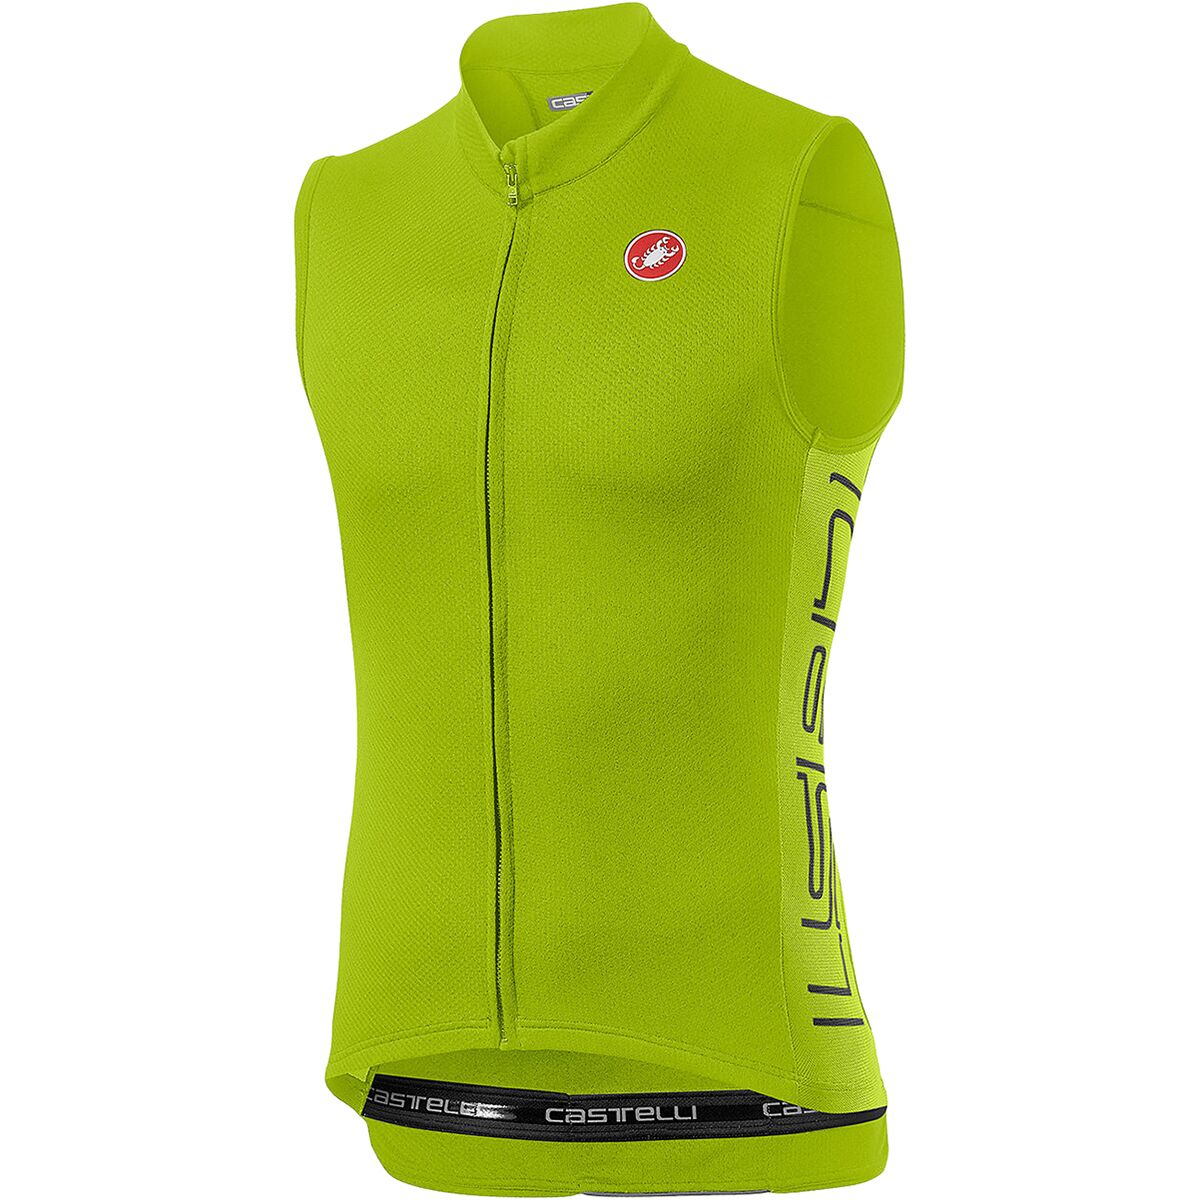 new S Authentic AGU Birino high quality men's road cycling sleeveless jersey hot